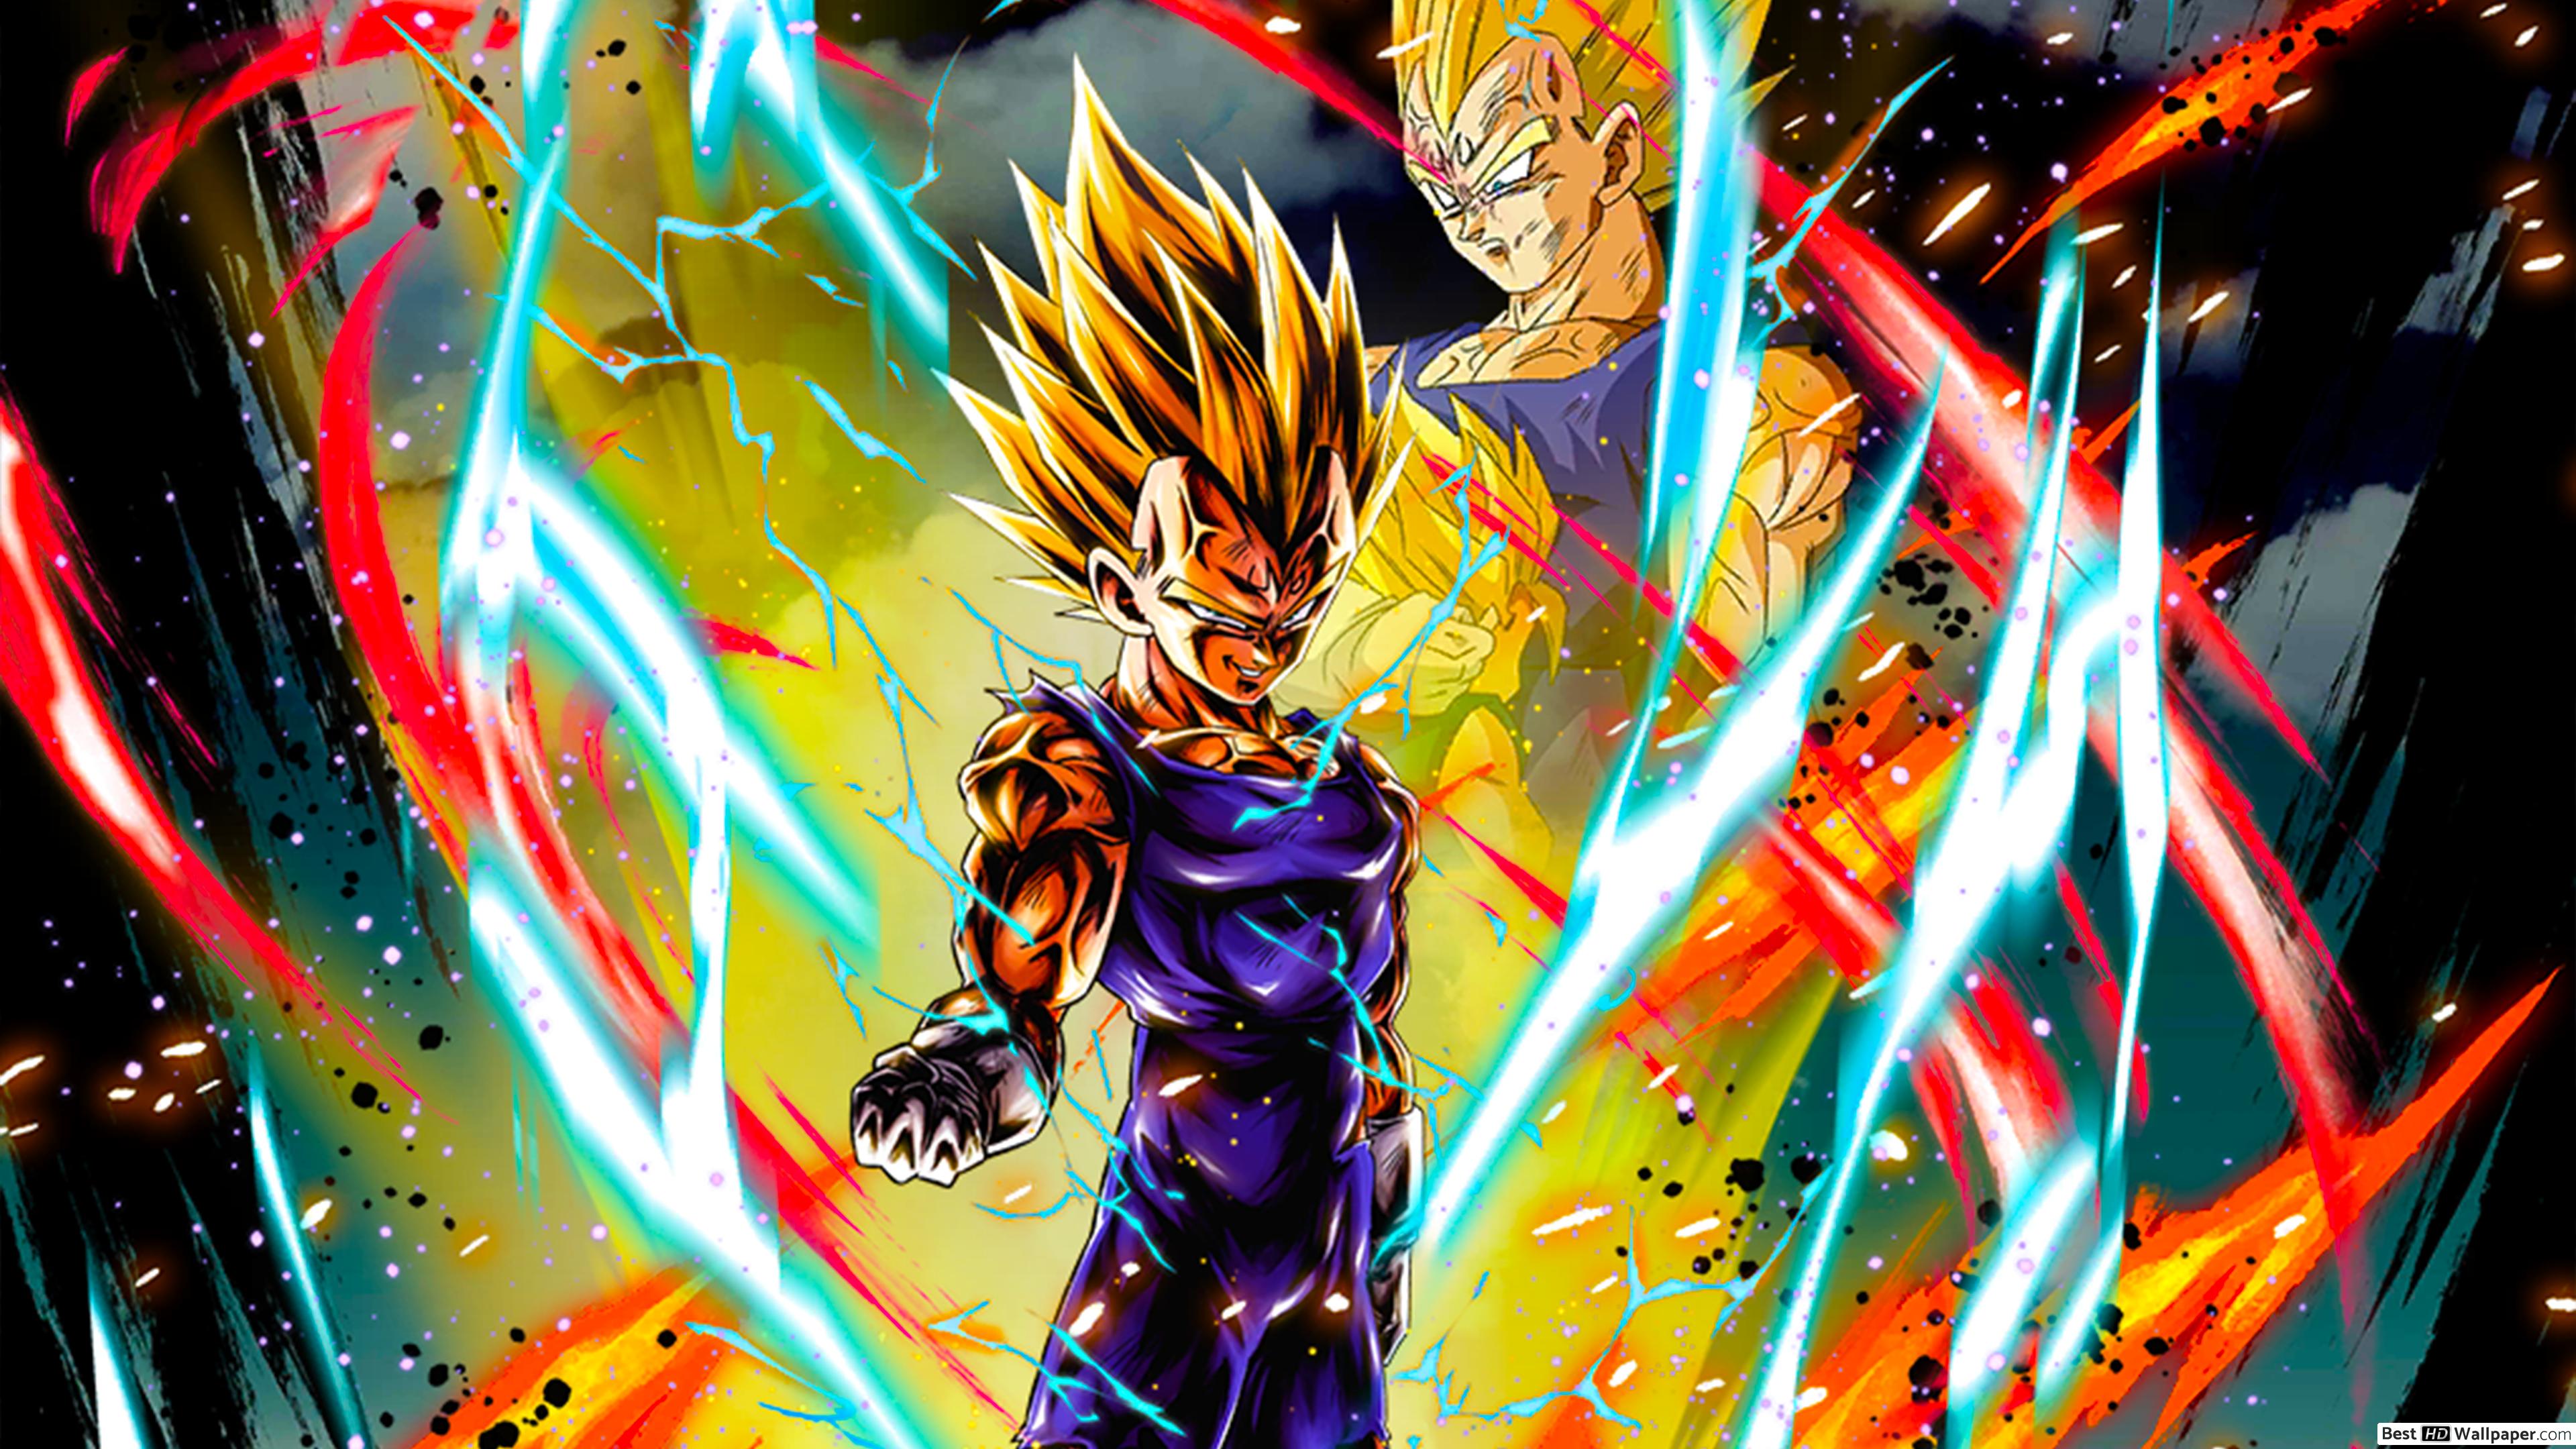 Goku vs Majin Vegeta wallpaper by reborndrew - Download on ZEDGE™ | a329